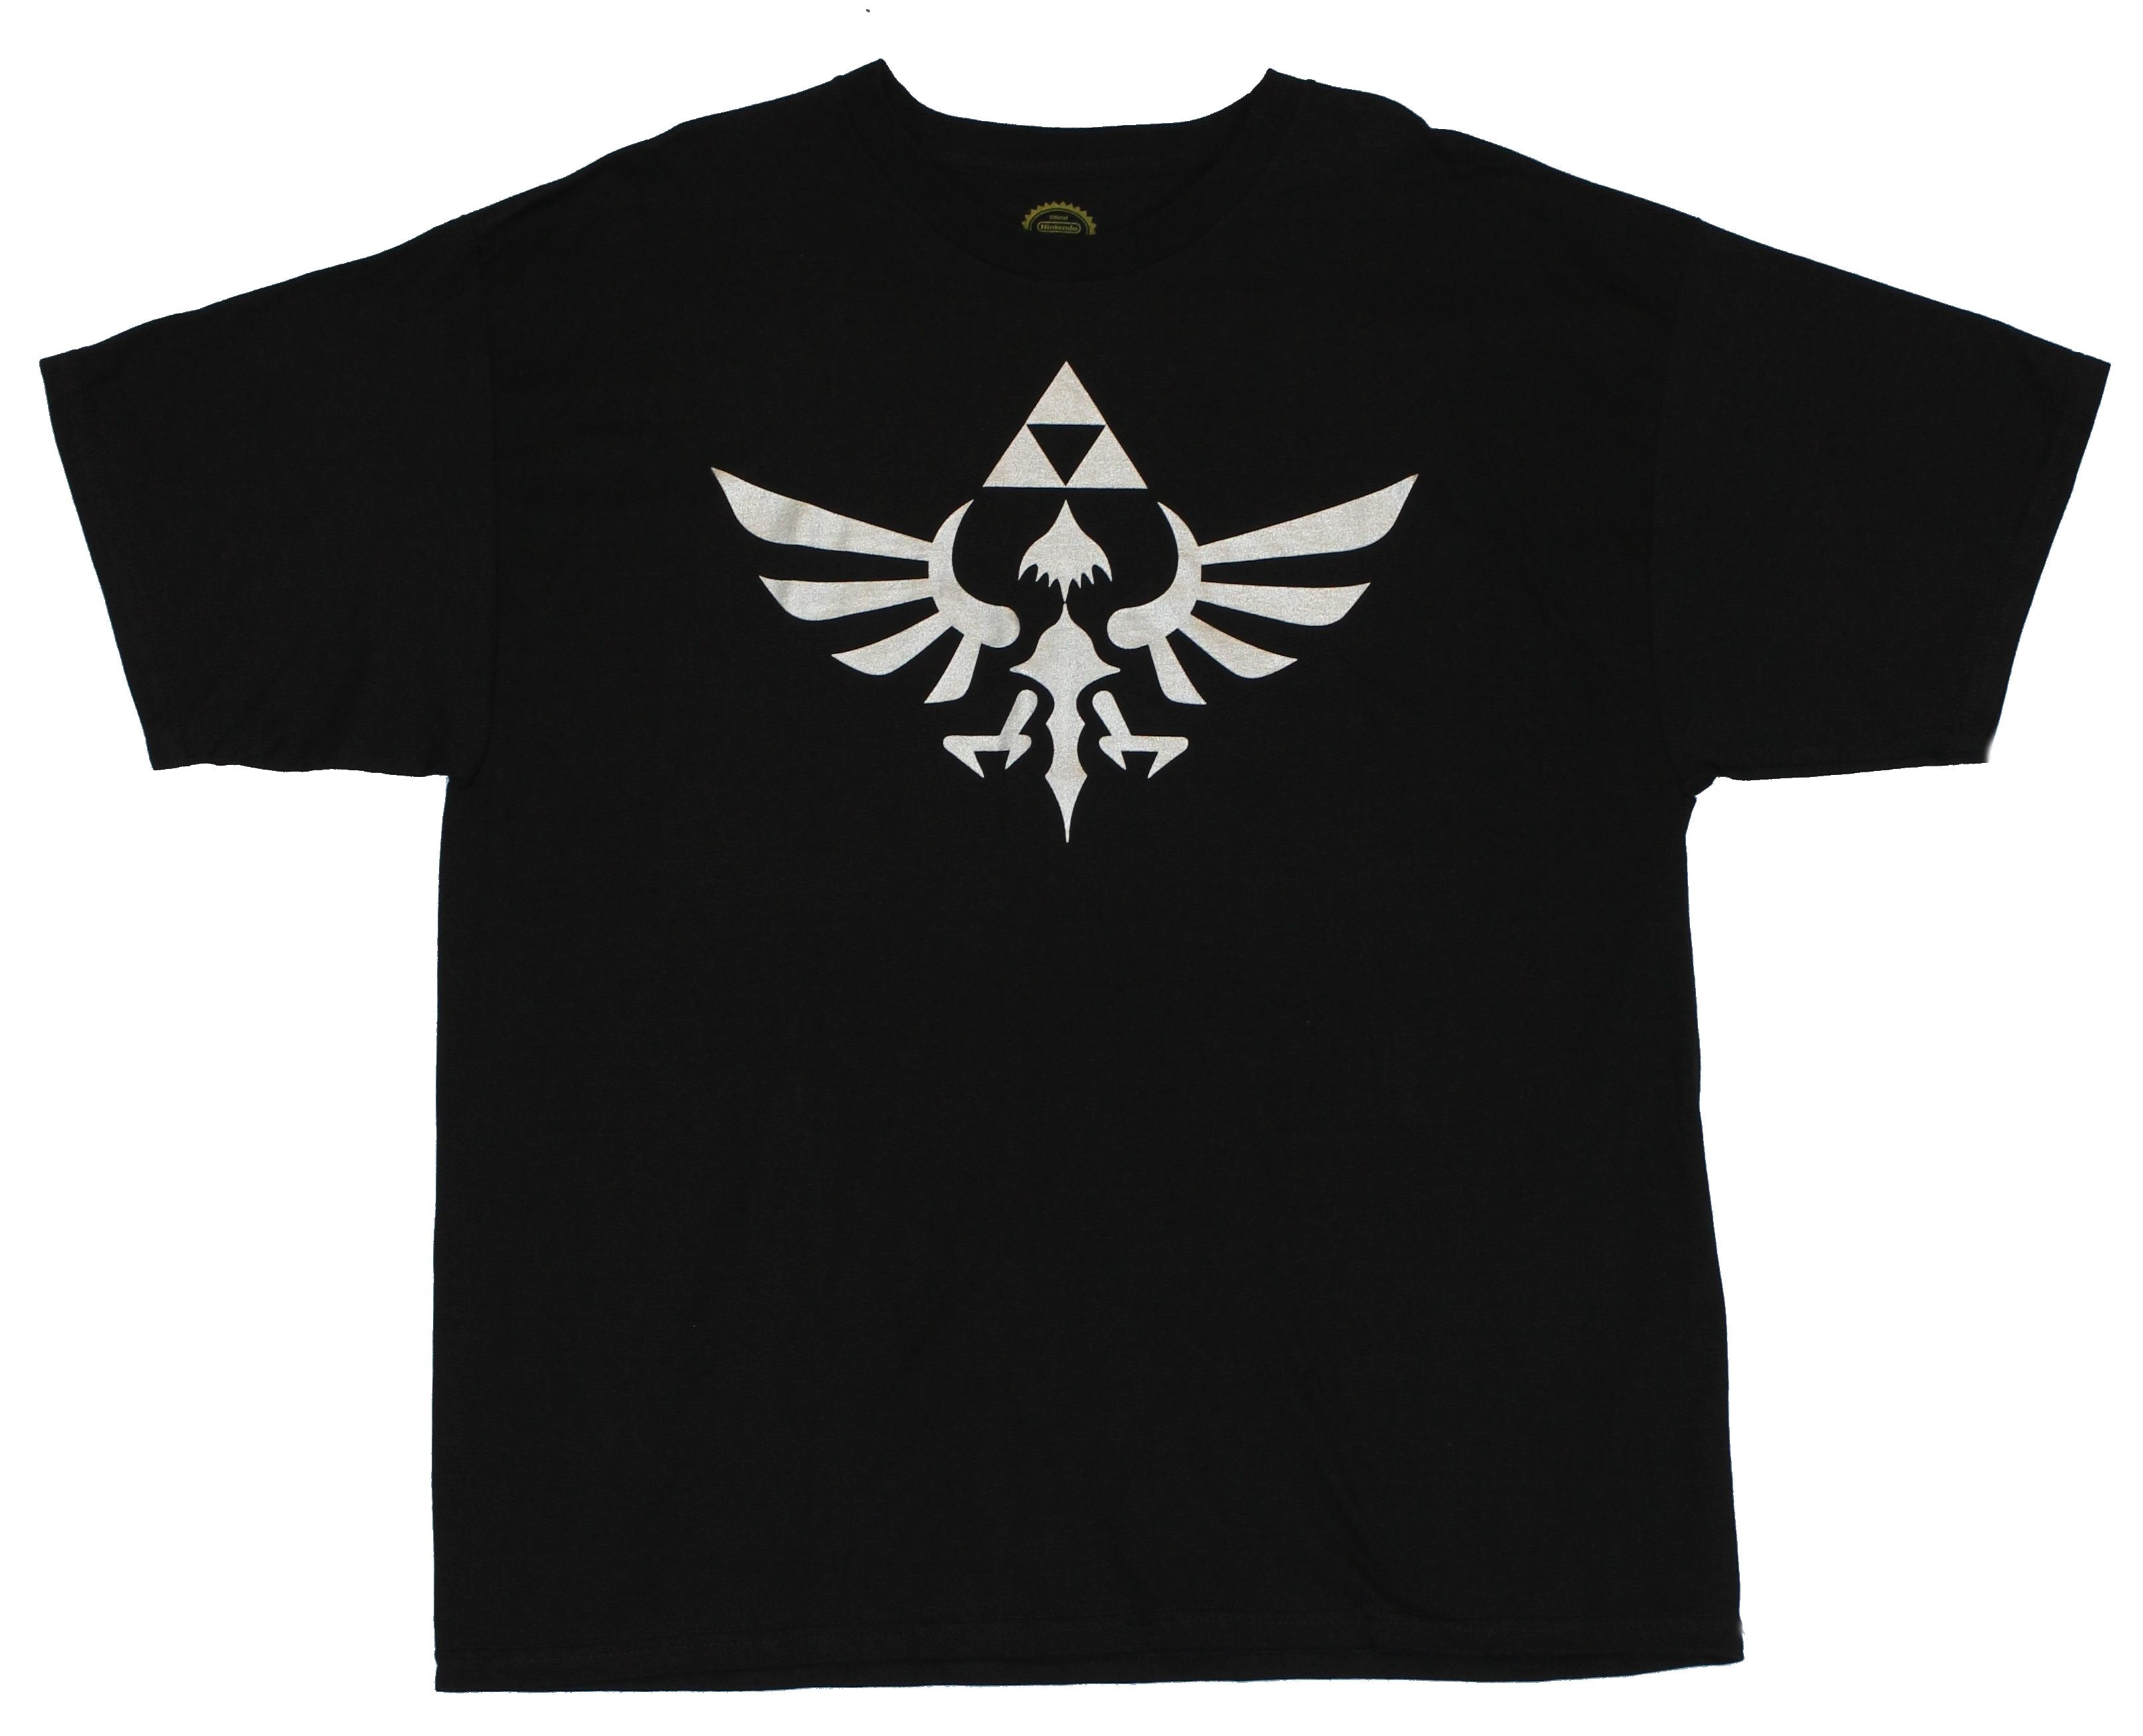 Legend of Zelda Mens T-Shirt - Classic White Tri-Force Logo Image